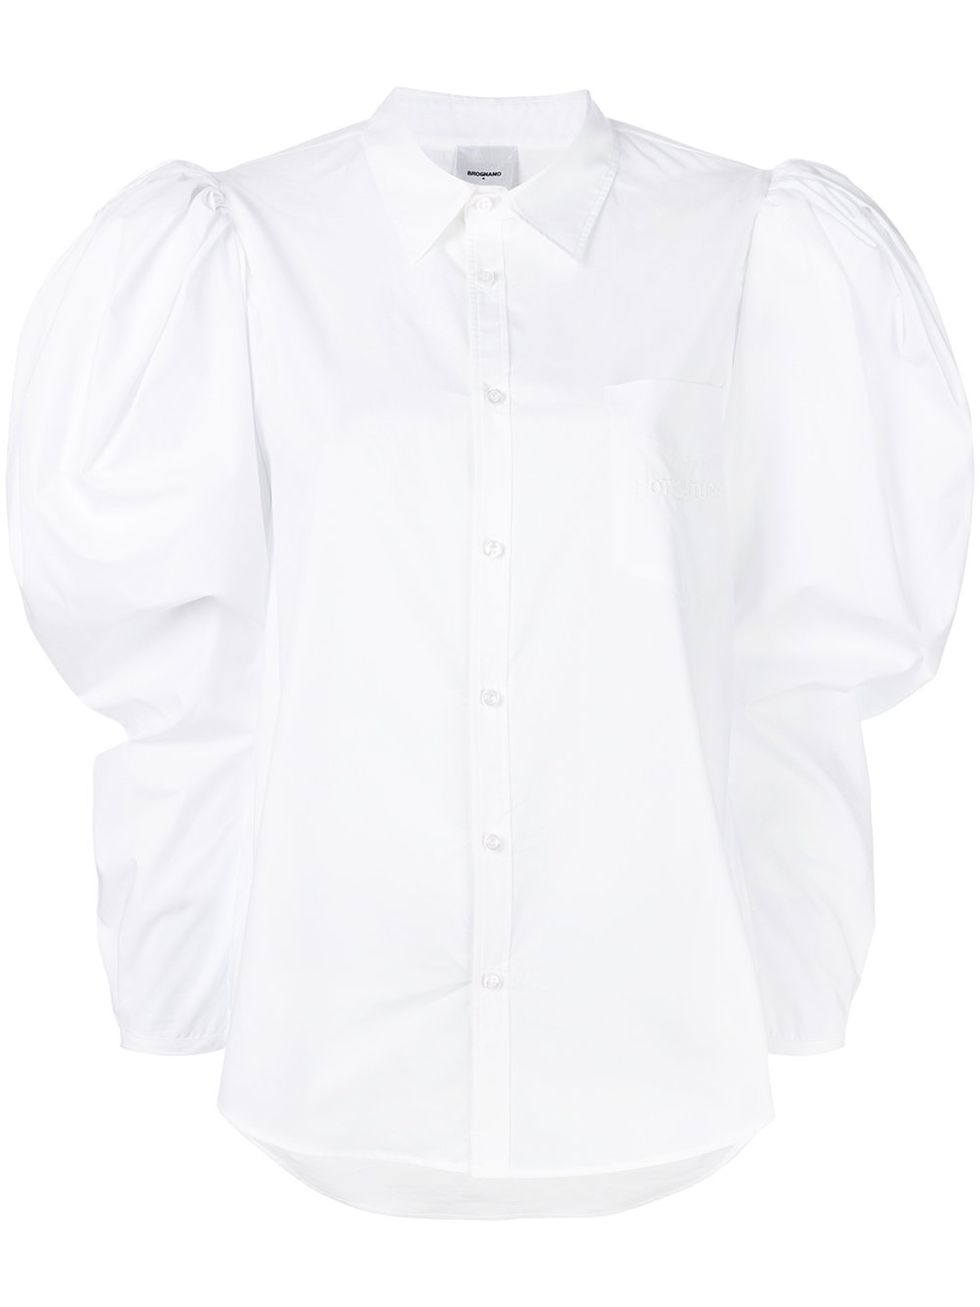 Clothing, White, Shirt, Sleeve, Collar, Button, Blouse, Top, Dress shirt, Outerwear, 